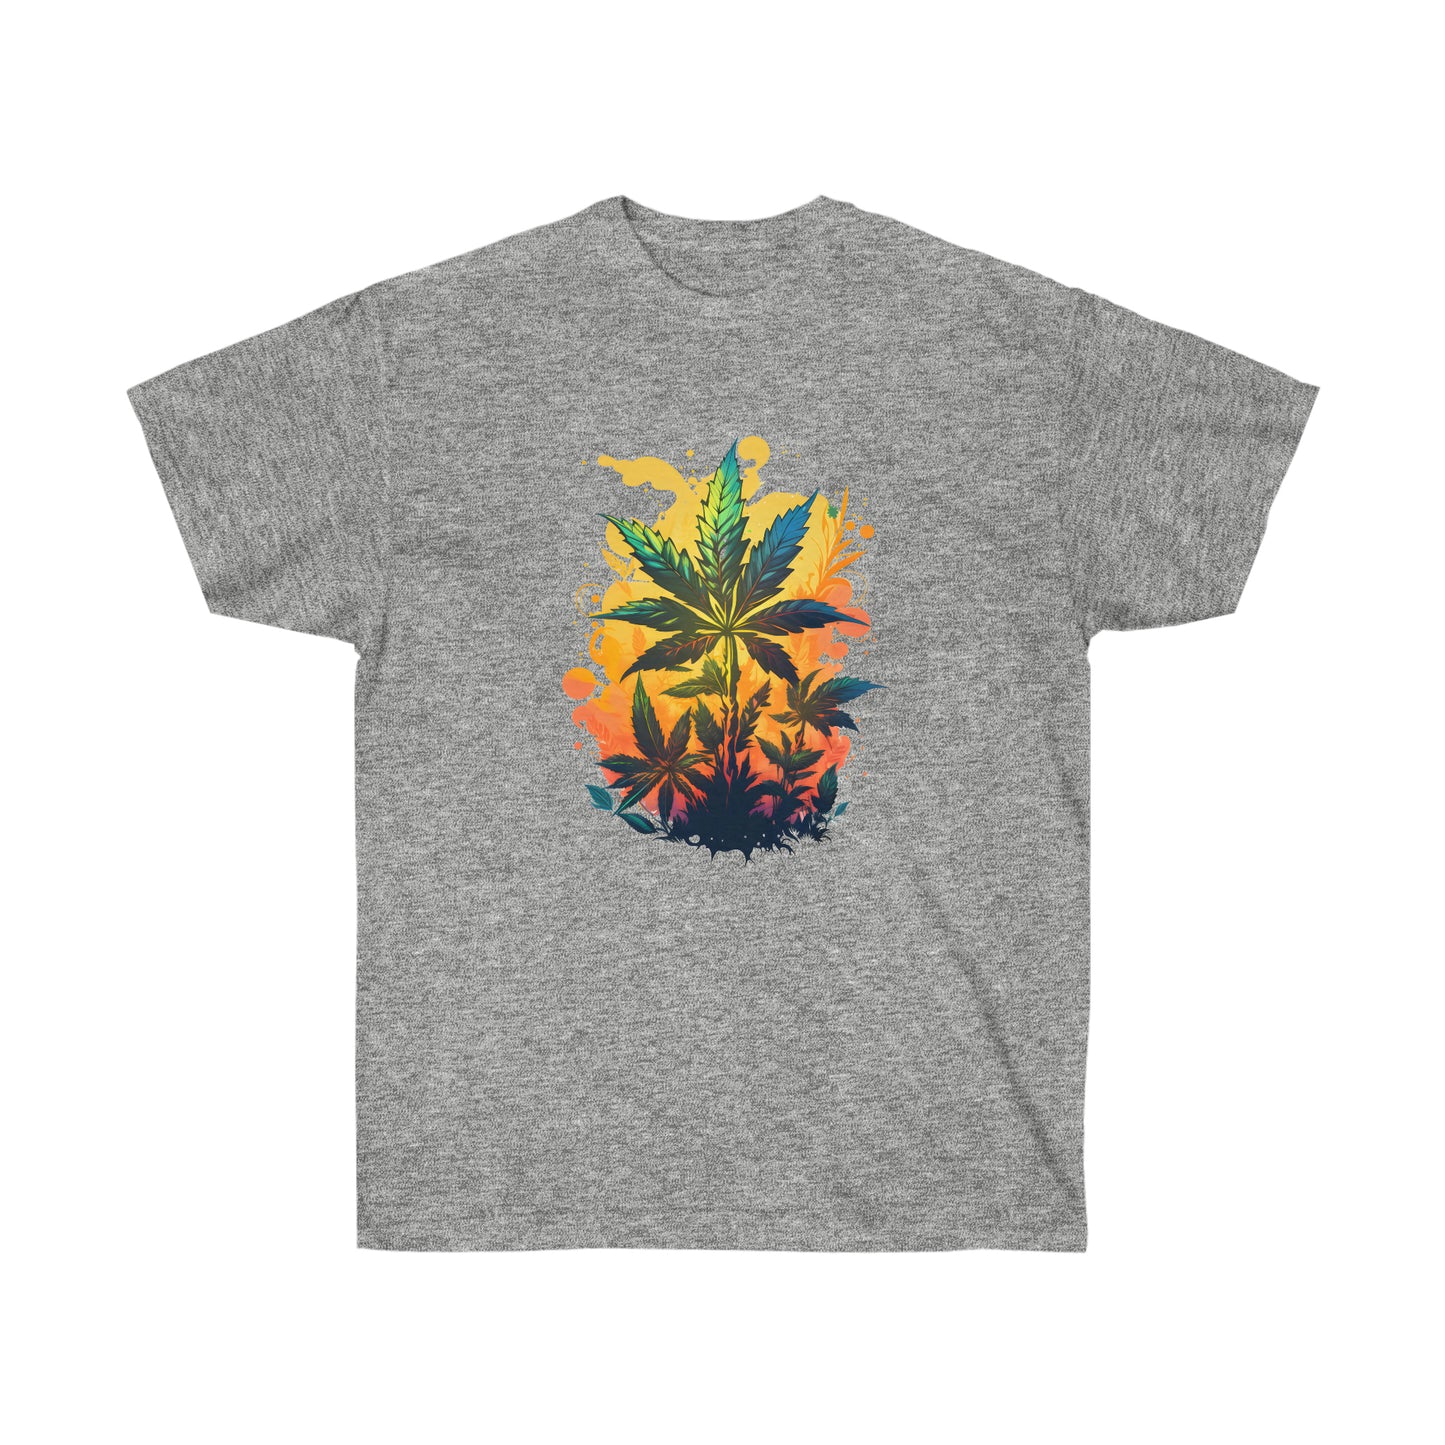 A sport grey, warm paradise cannabis t-shirt